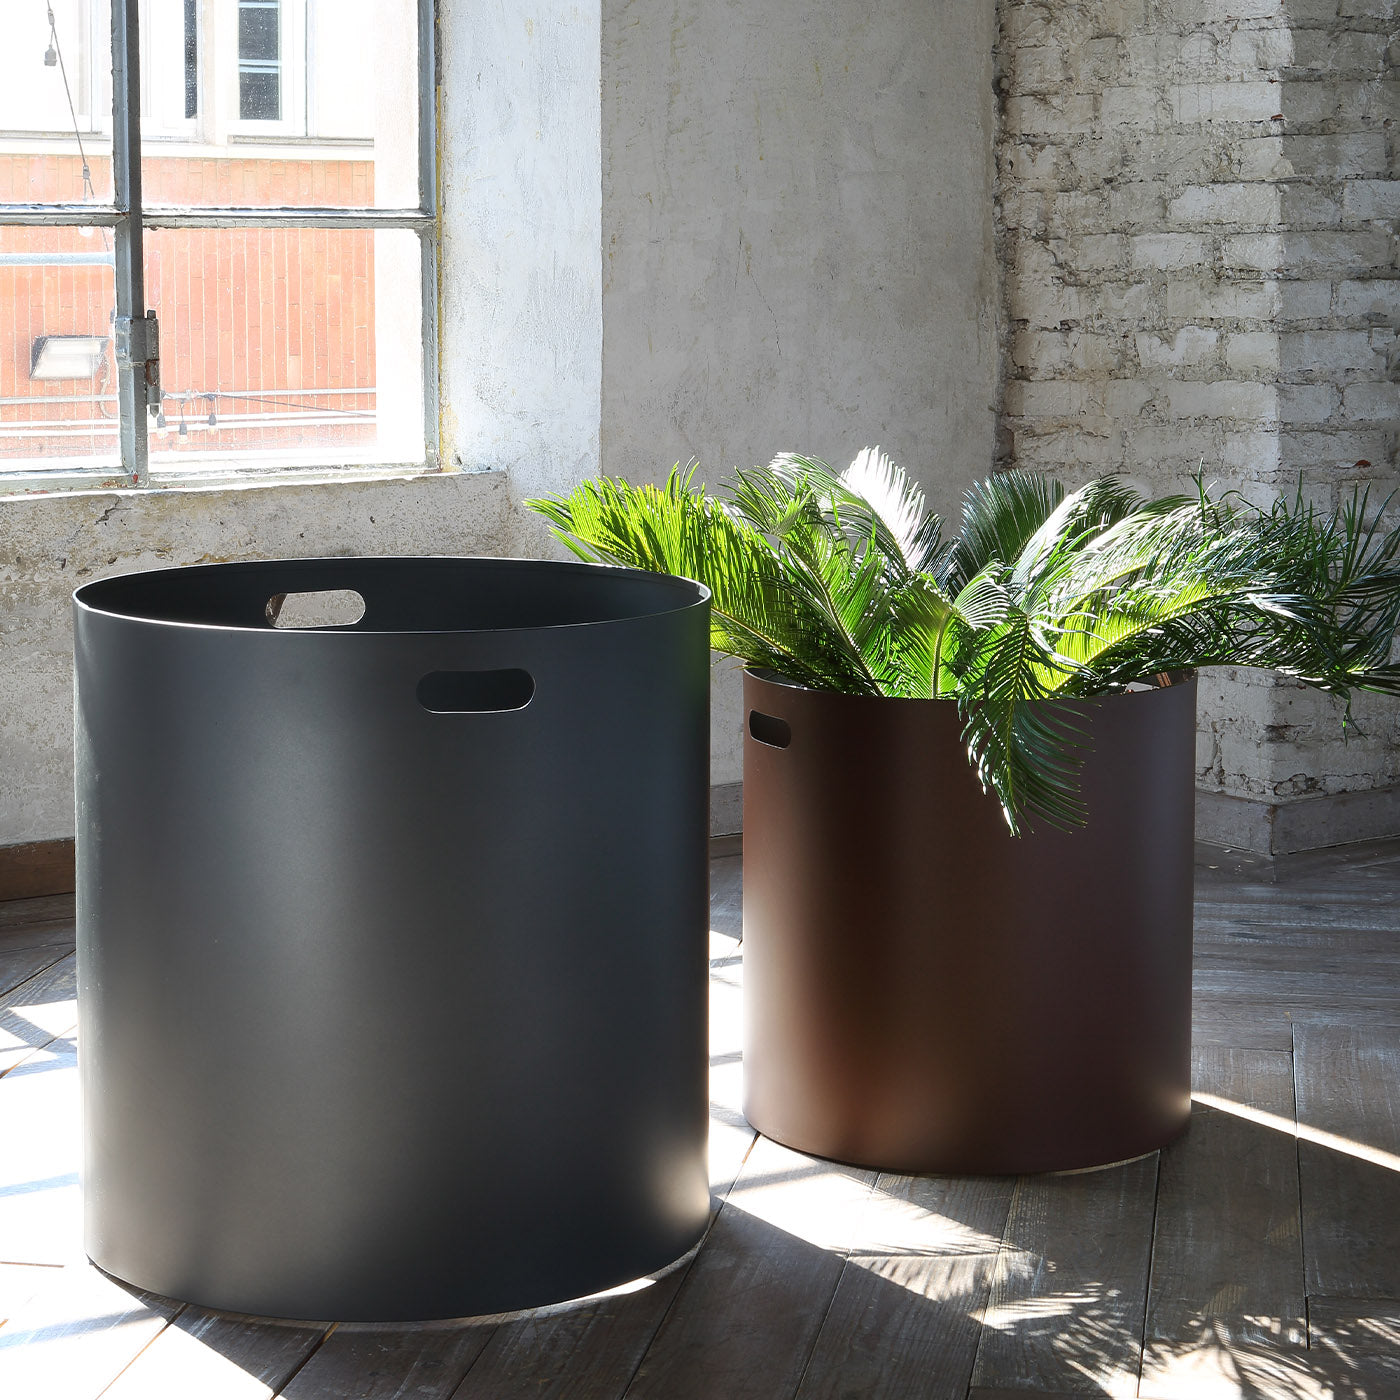 Irony Outdoor Pot Planter by Maurizio Peregalli - Alternative view 2